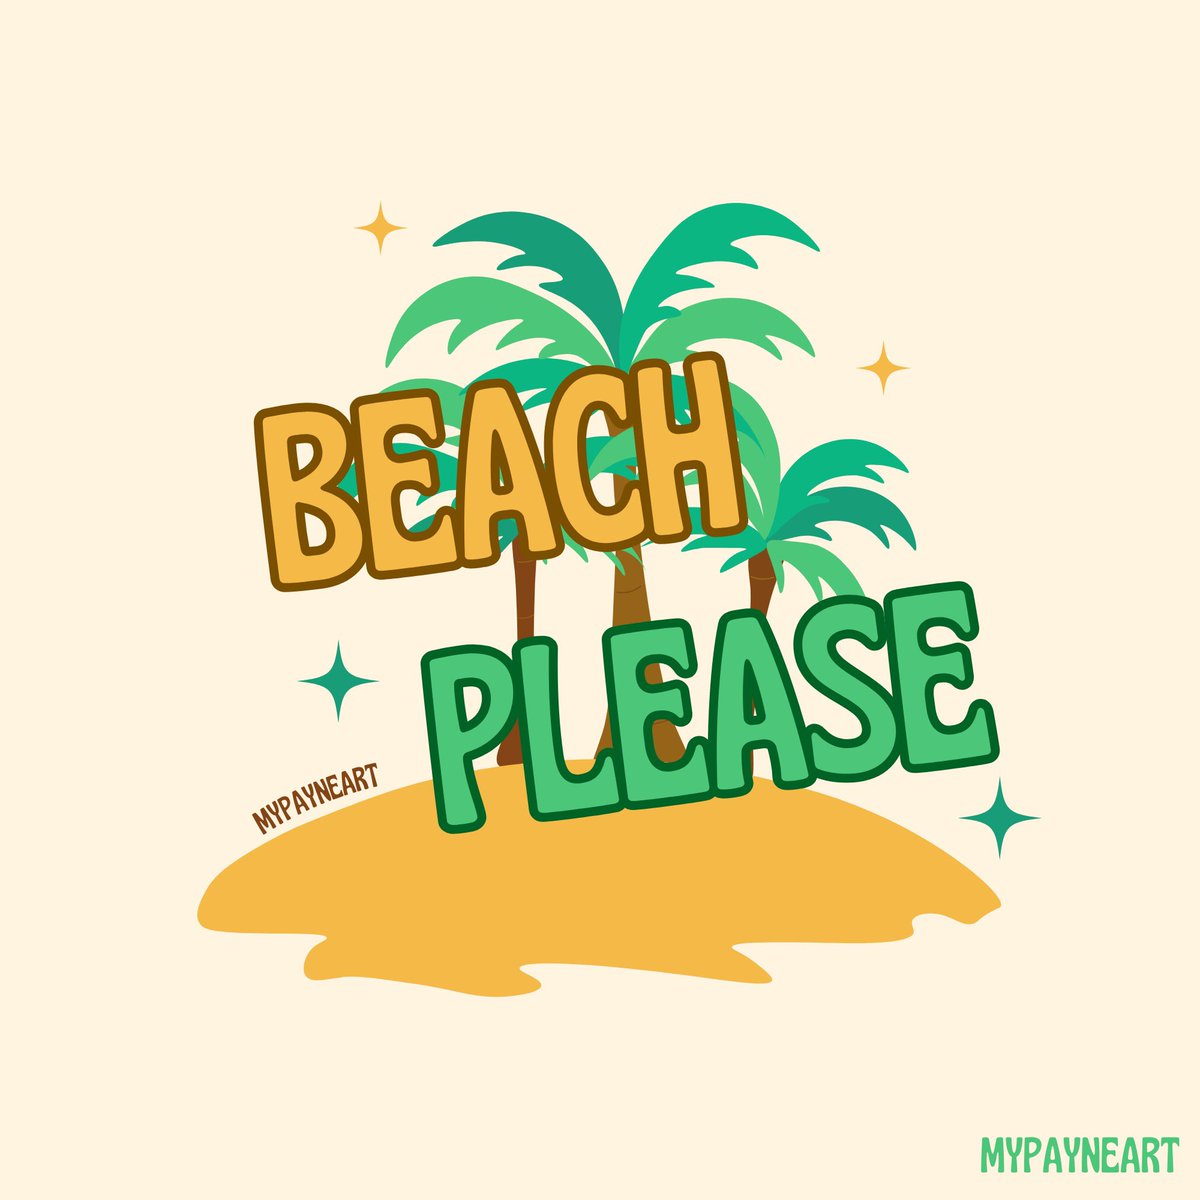 #BeachPlease 🏝
.
.
.
#beach #vacation #palmtrees #vacay #graphicdesigner #graphicdesignlife #artoftheday #canvaart #art #artist #girlartist #typography #type #typographyinspo #graphicdesignercommunity #graphicdesigncommunity #graphicdesign #digital #digitalart #lifeofagraphics